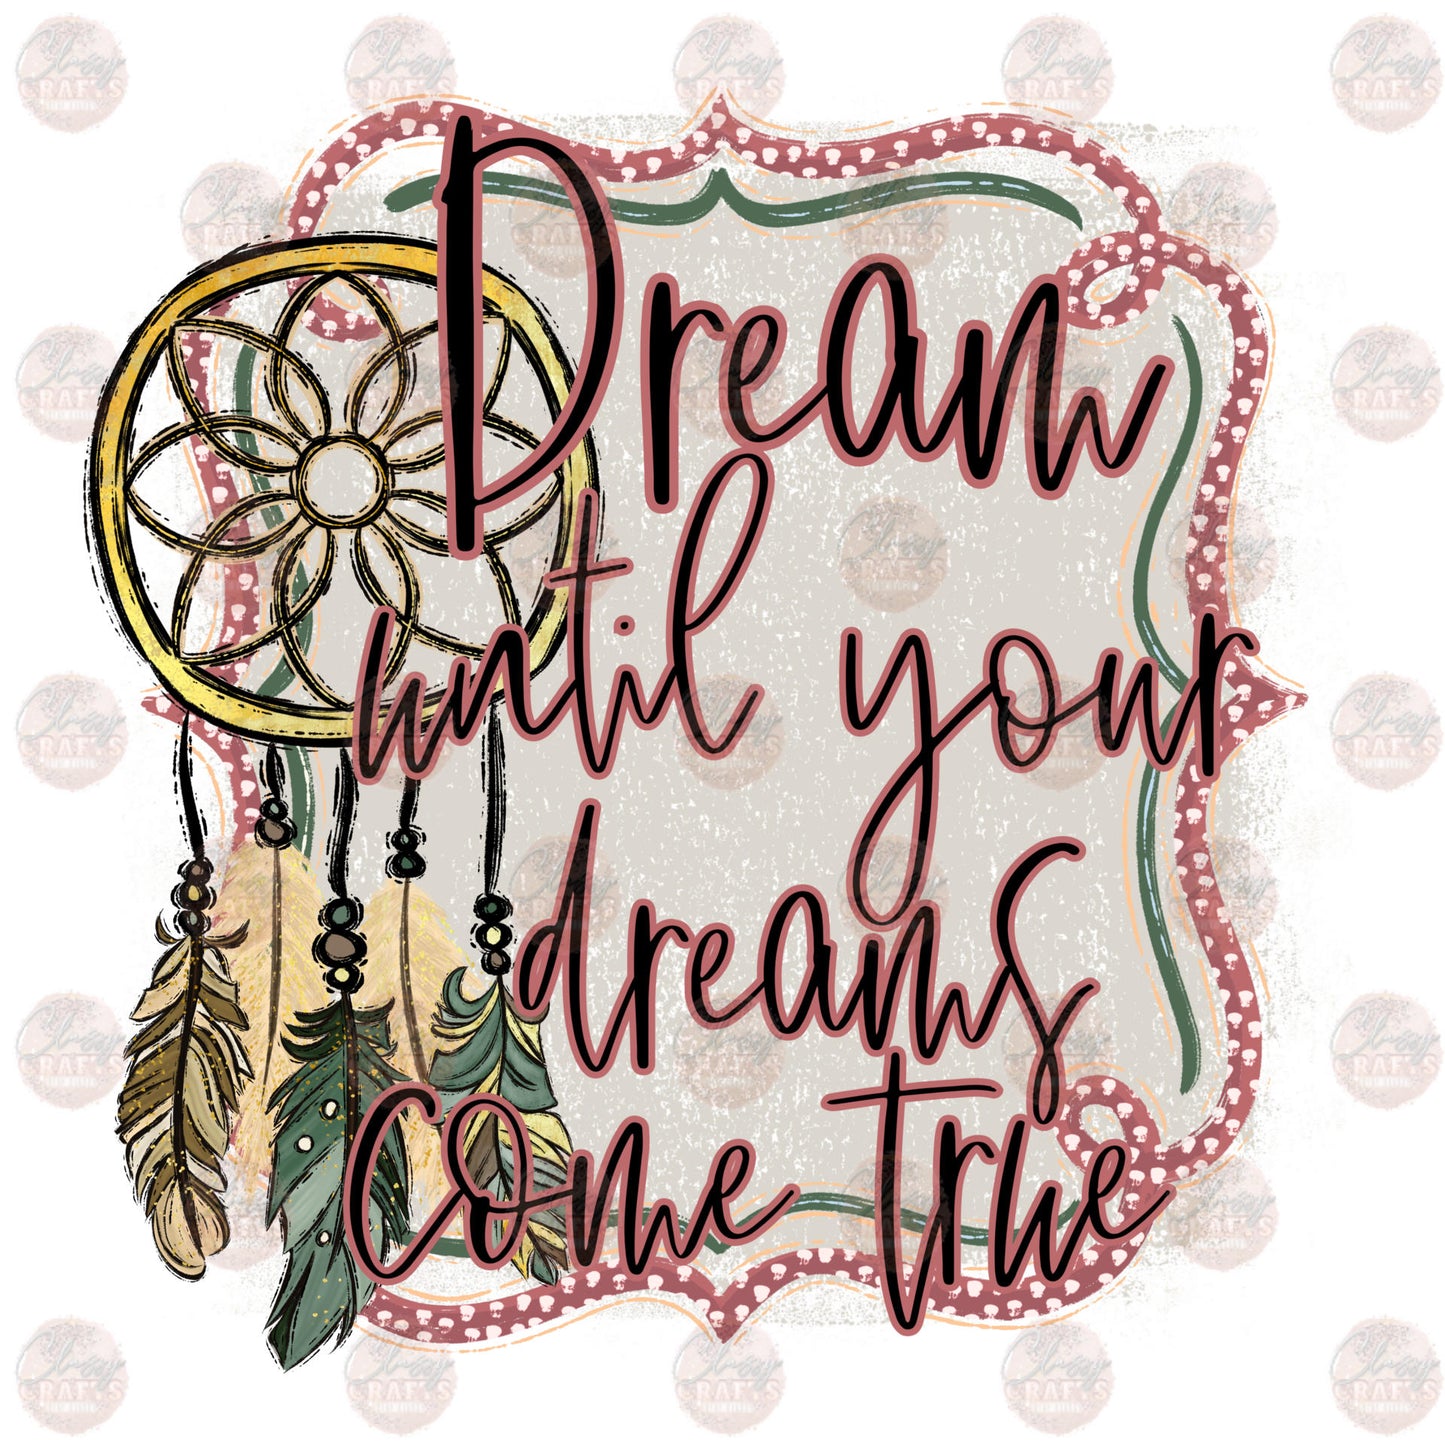 Dream Until Your Dreams Come True - Sublimation Transfer